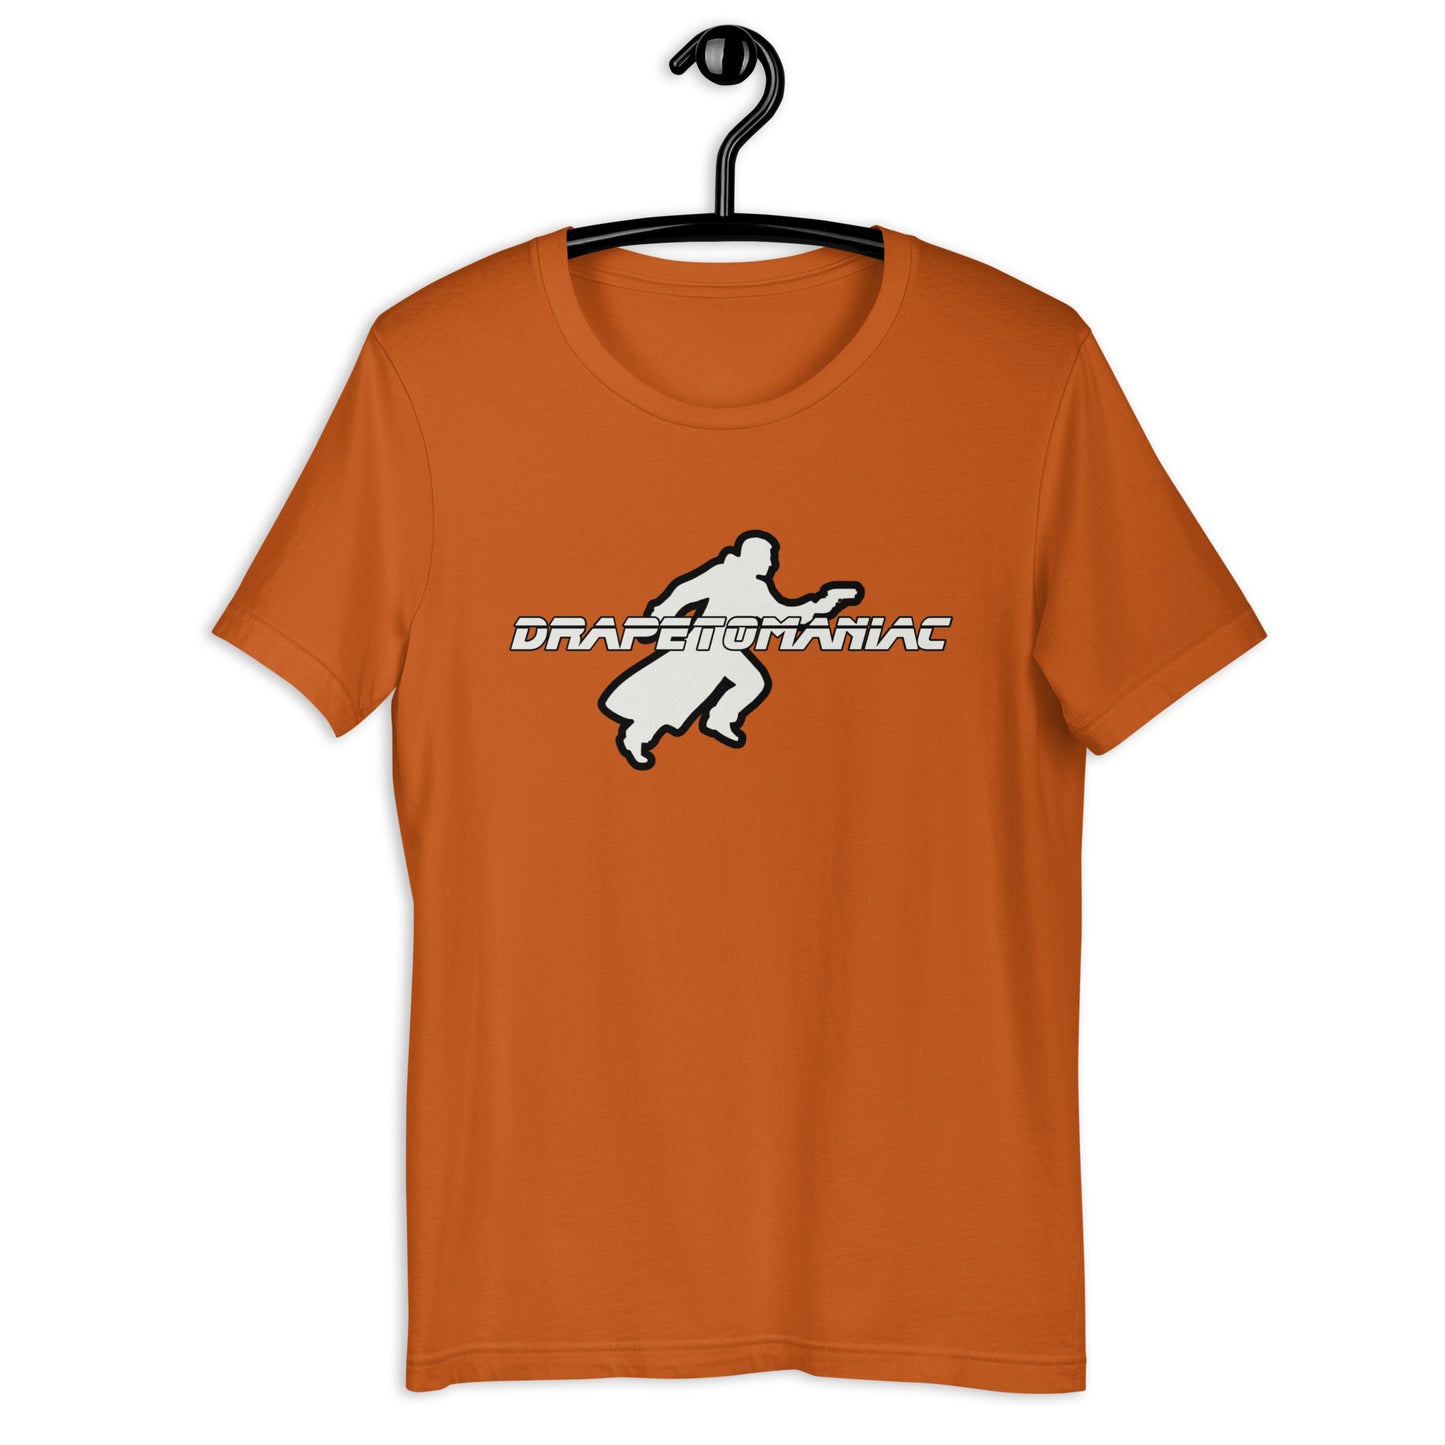 Drapetomaniac - Unisex t-shirt